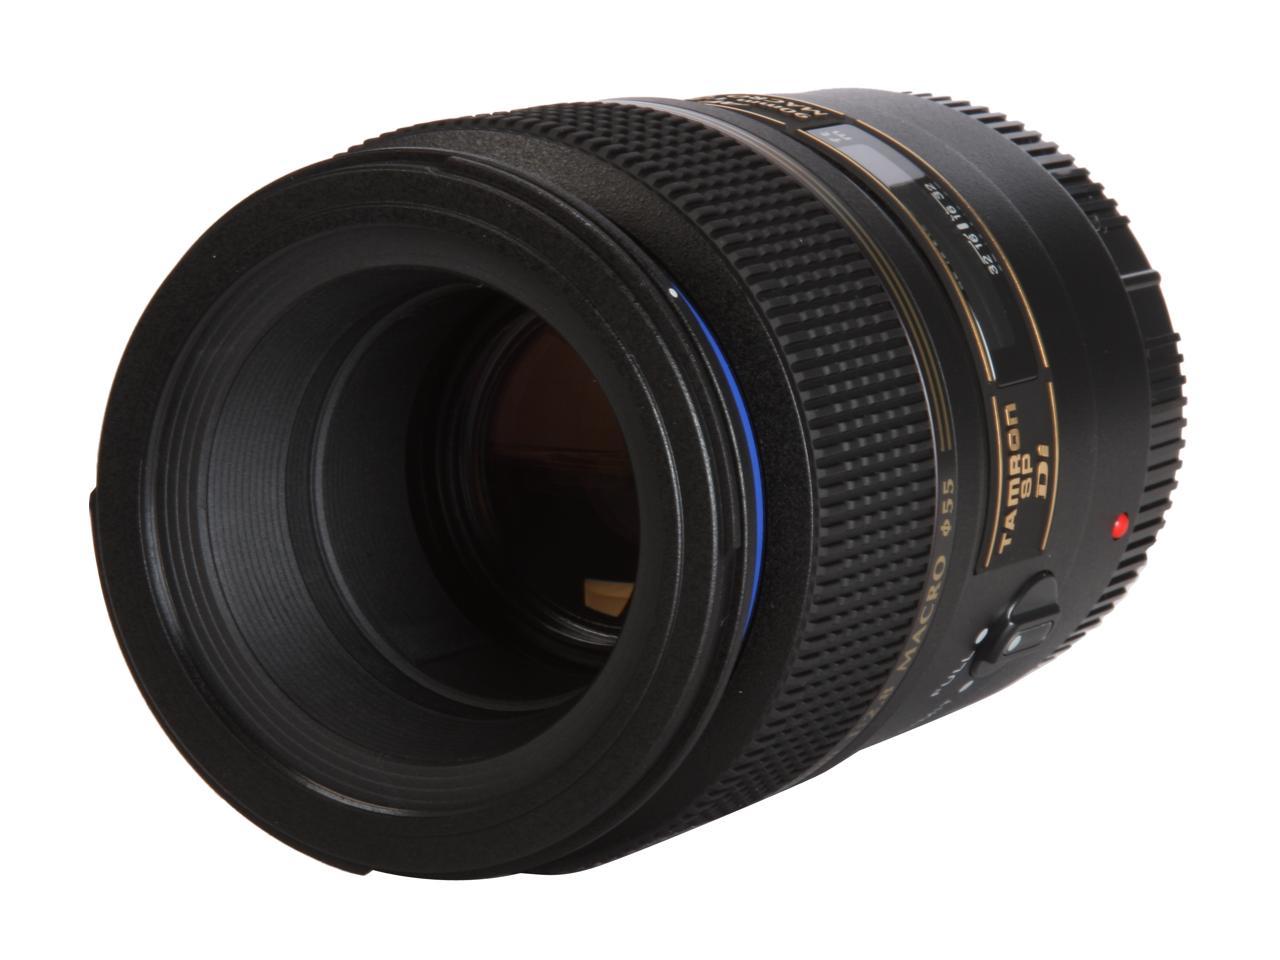 TAMRON SP AF 90mm F/2.8 Di Macro 1:1 Lens for Canon Digital SLR